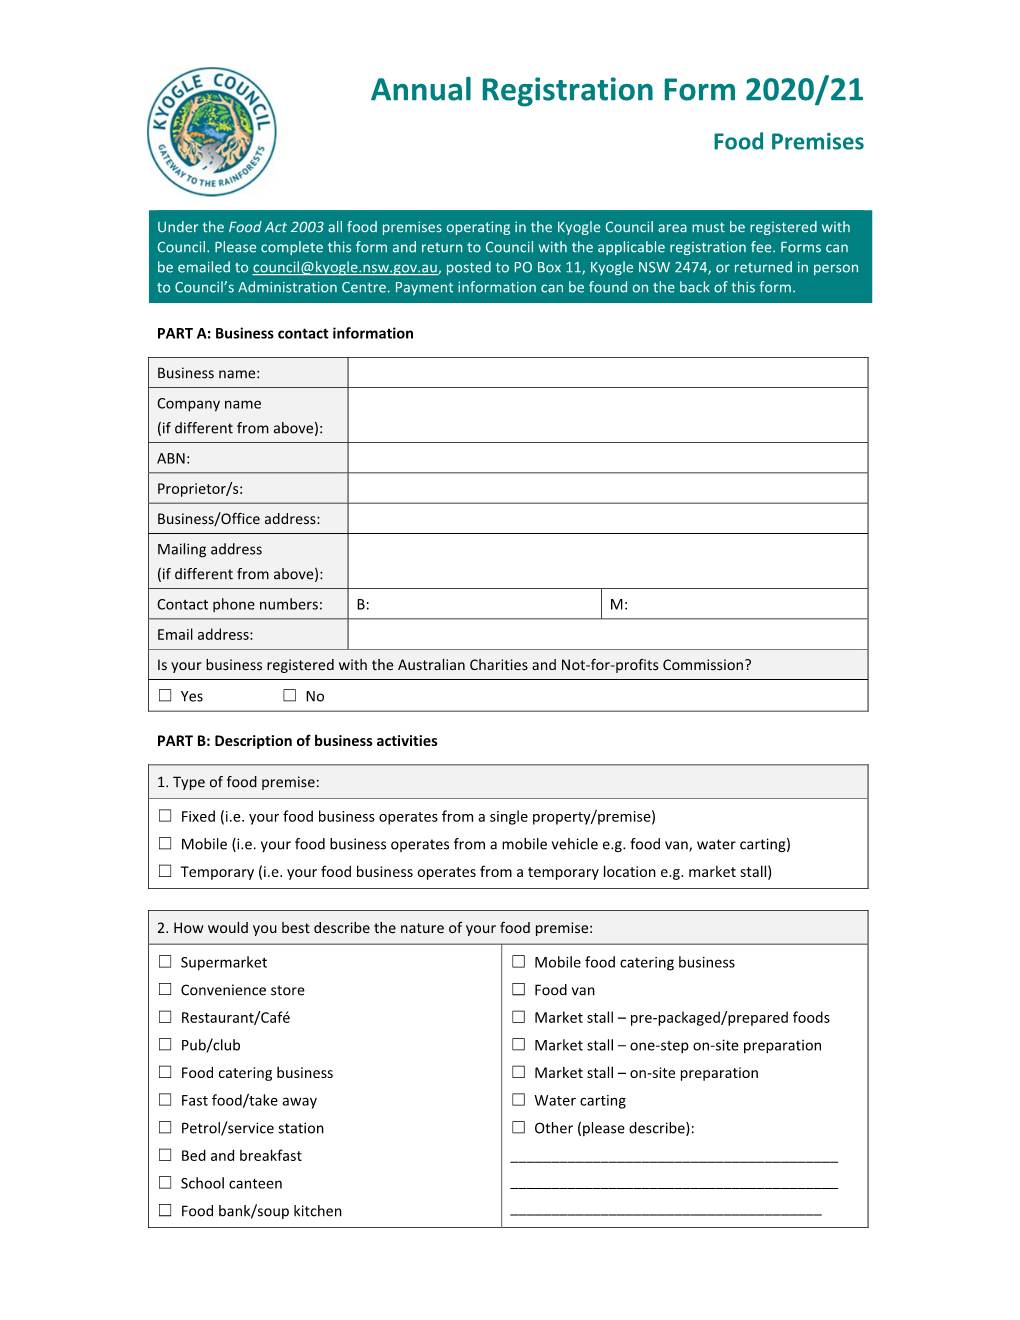 Annual Registration Form 2020/21 Food Premises